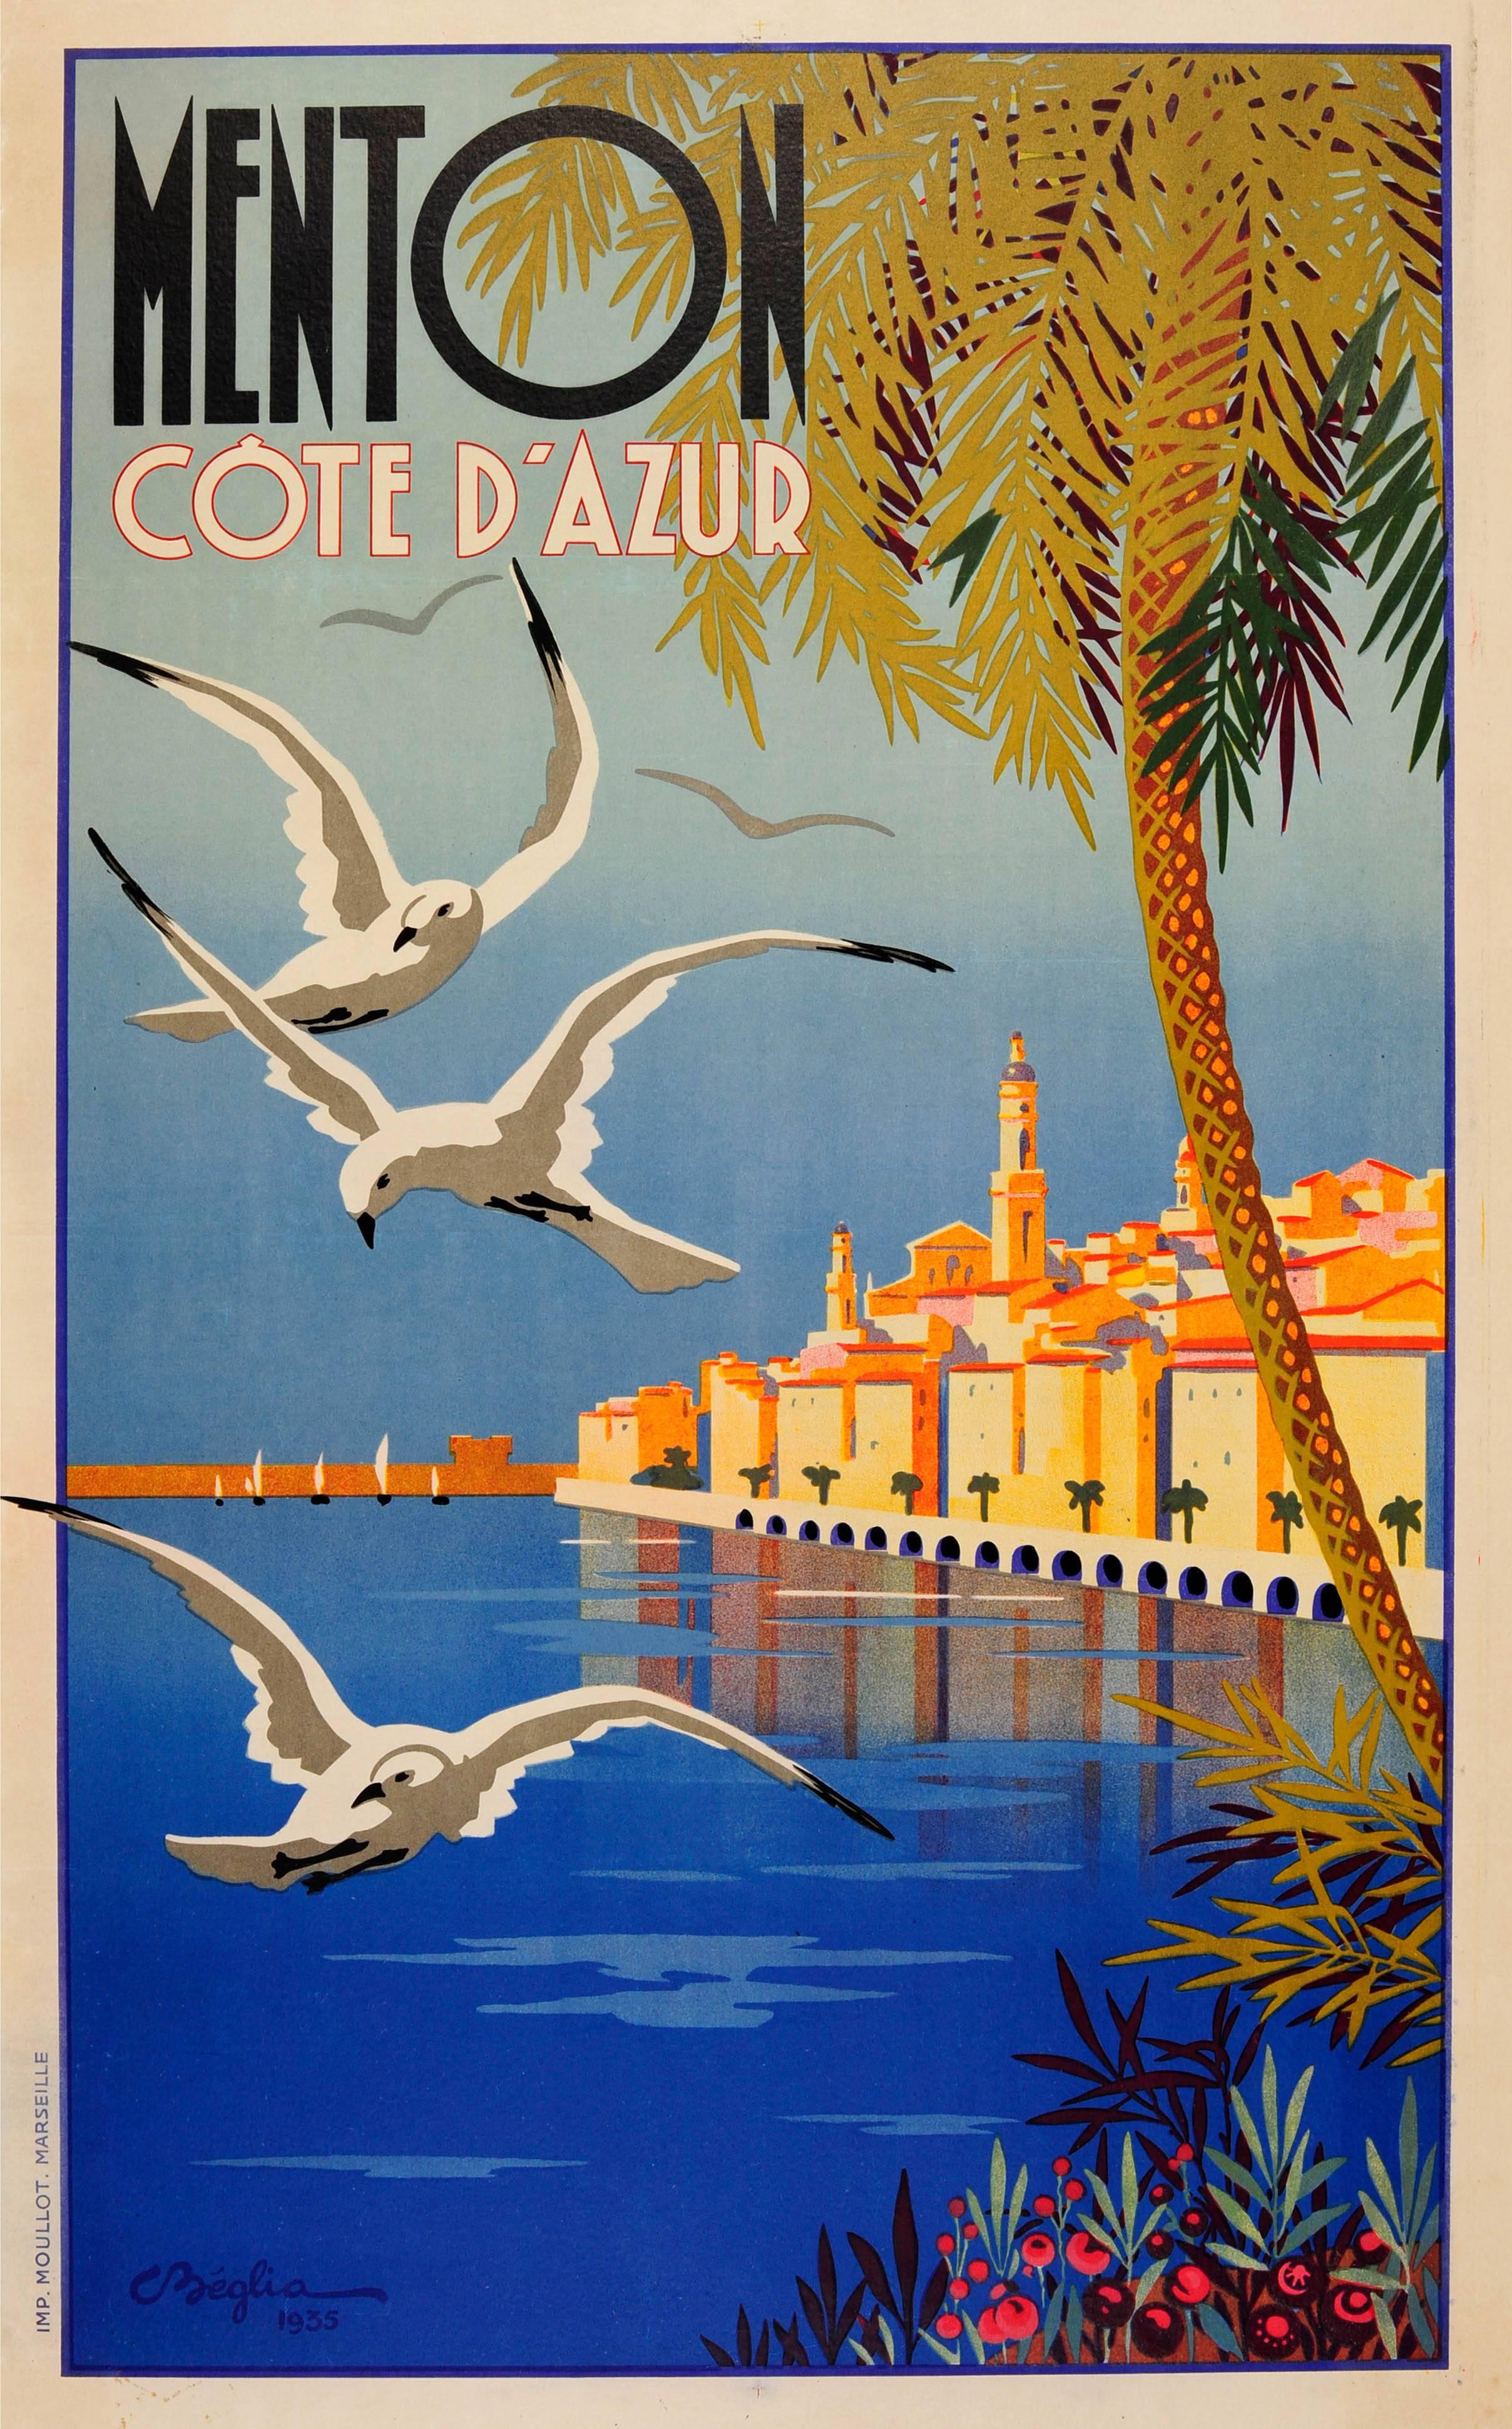 Original Vintage 1935 Travel Poster By Charles Beglia: Menton Cote d'Azur France